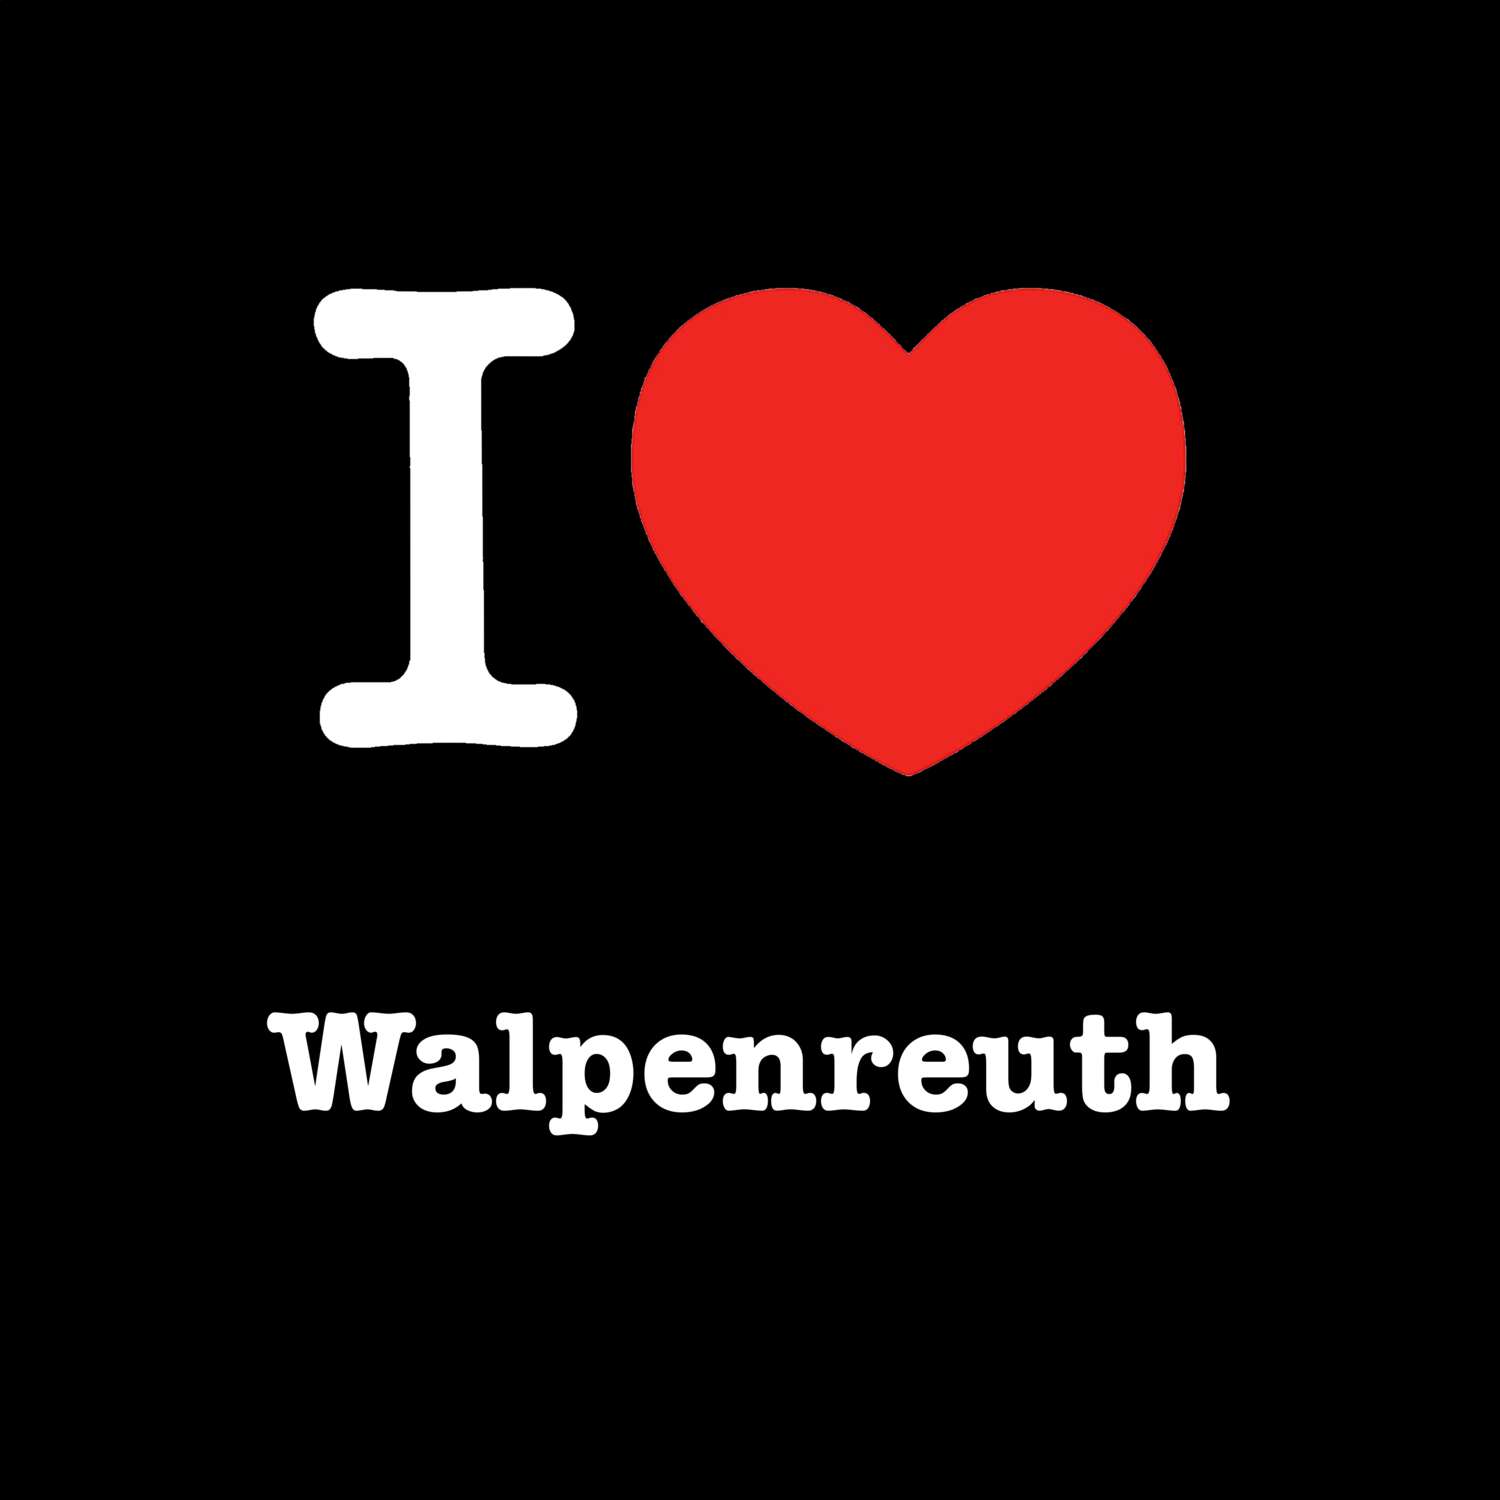 Walpenreuth T-Shirt »I love«